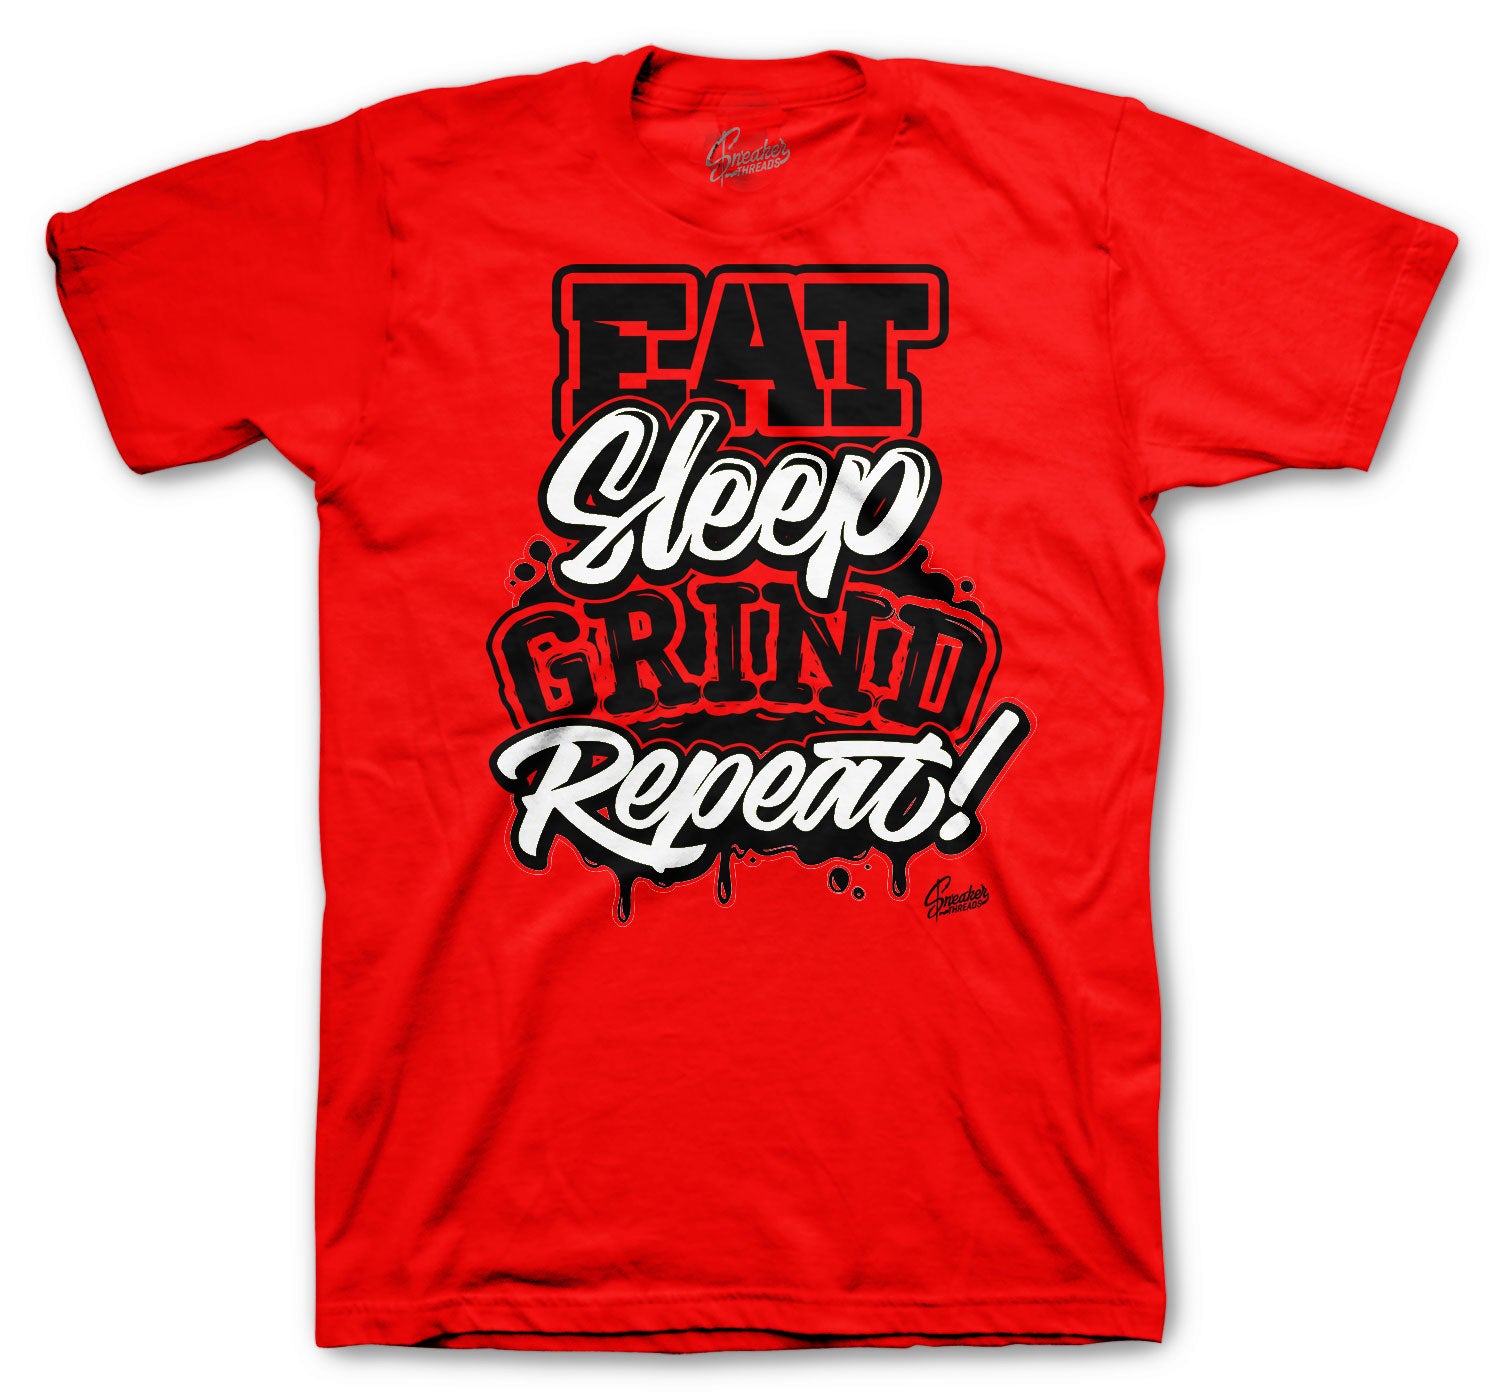 Retro 1 Satin Snake Shirt -  Daily Routine - Red